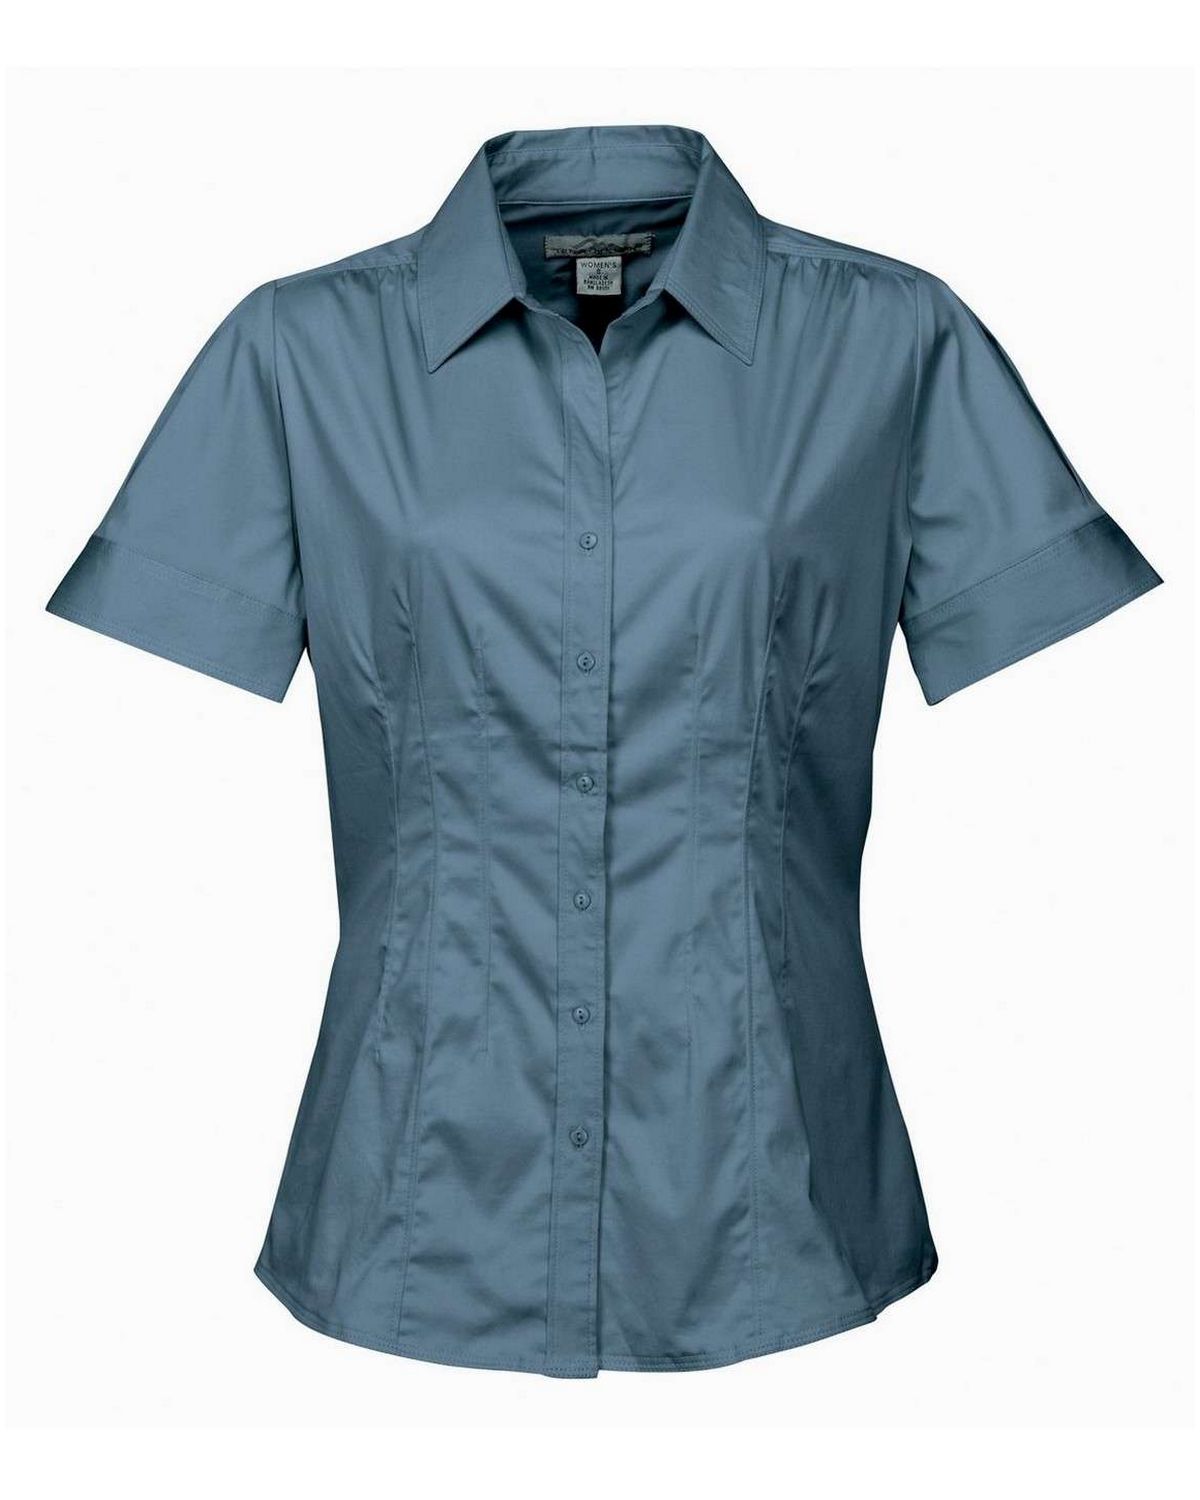 Lilac Bloom LB755 - Ashley-Women's Short Sleeve Woven Shirt by Tri Mountain